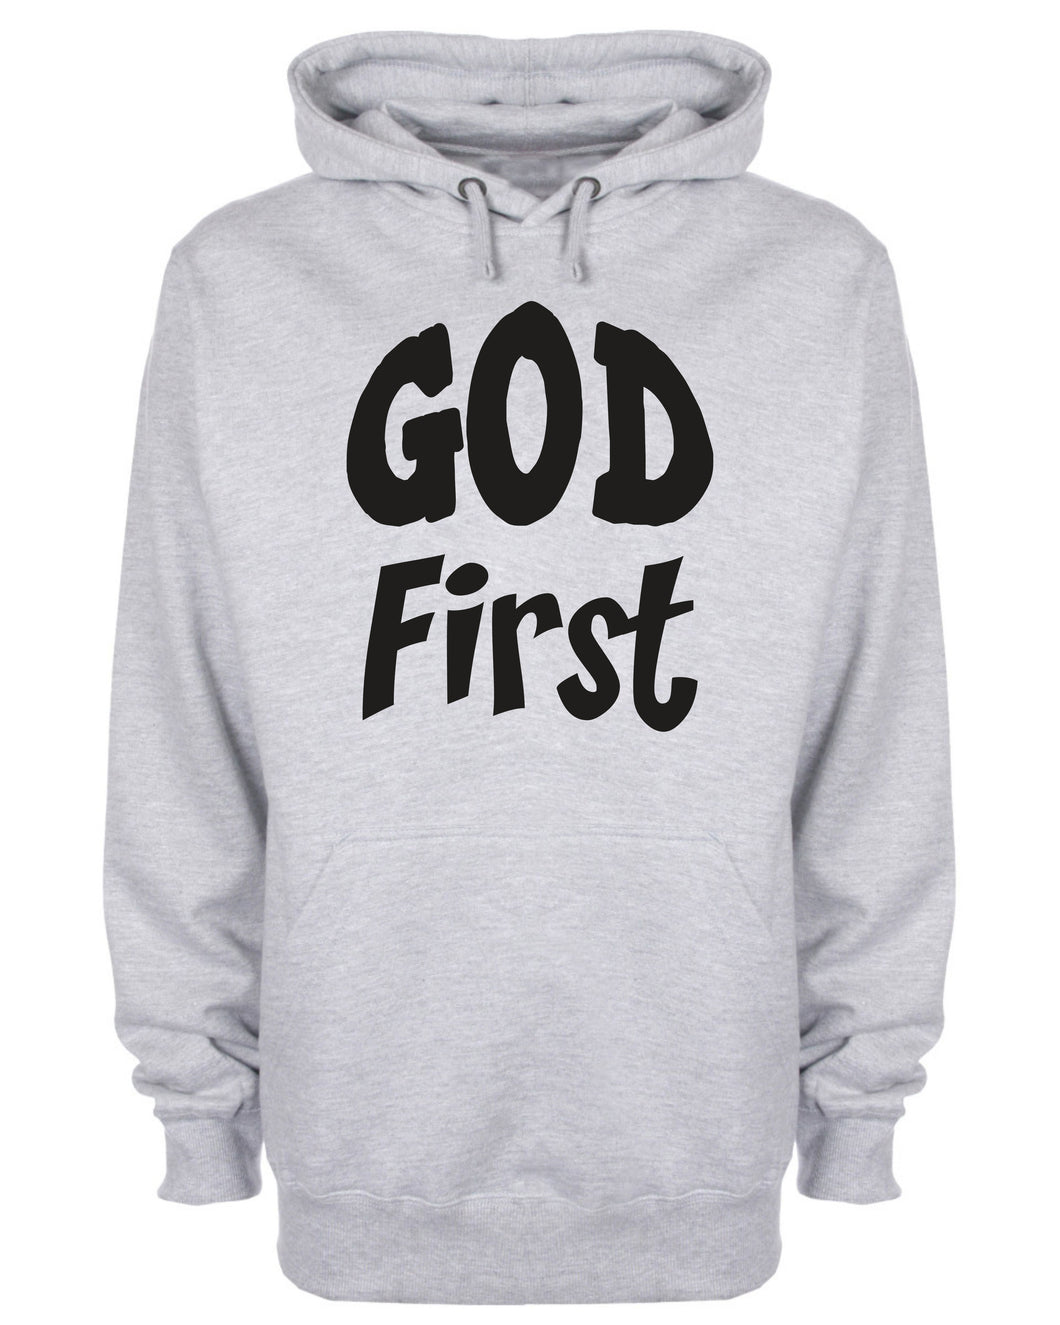 God First Hoodie Christian Jesus Christ Sweatshirt